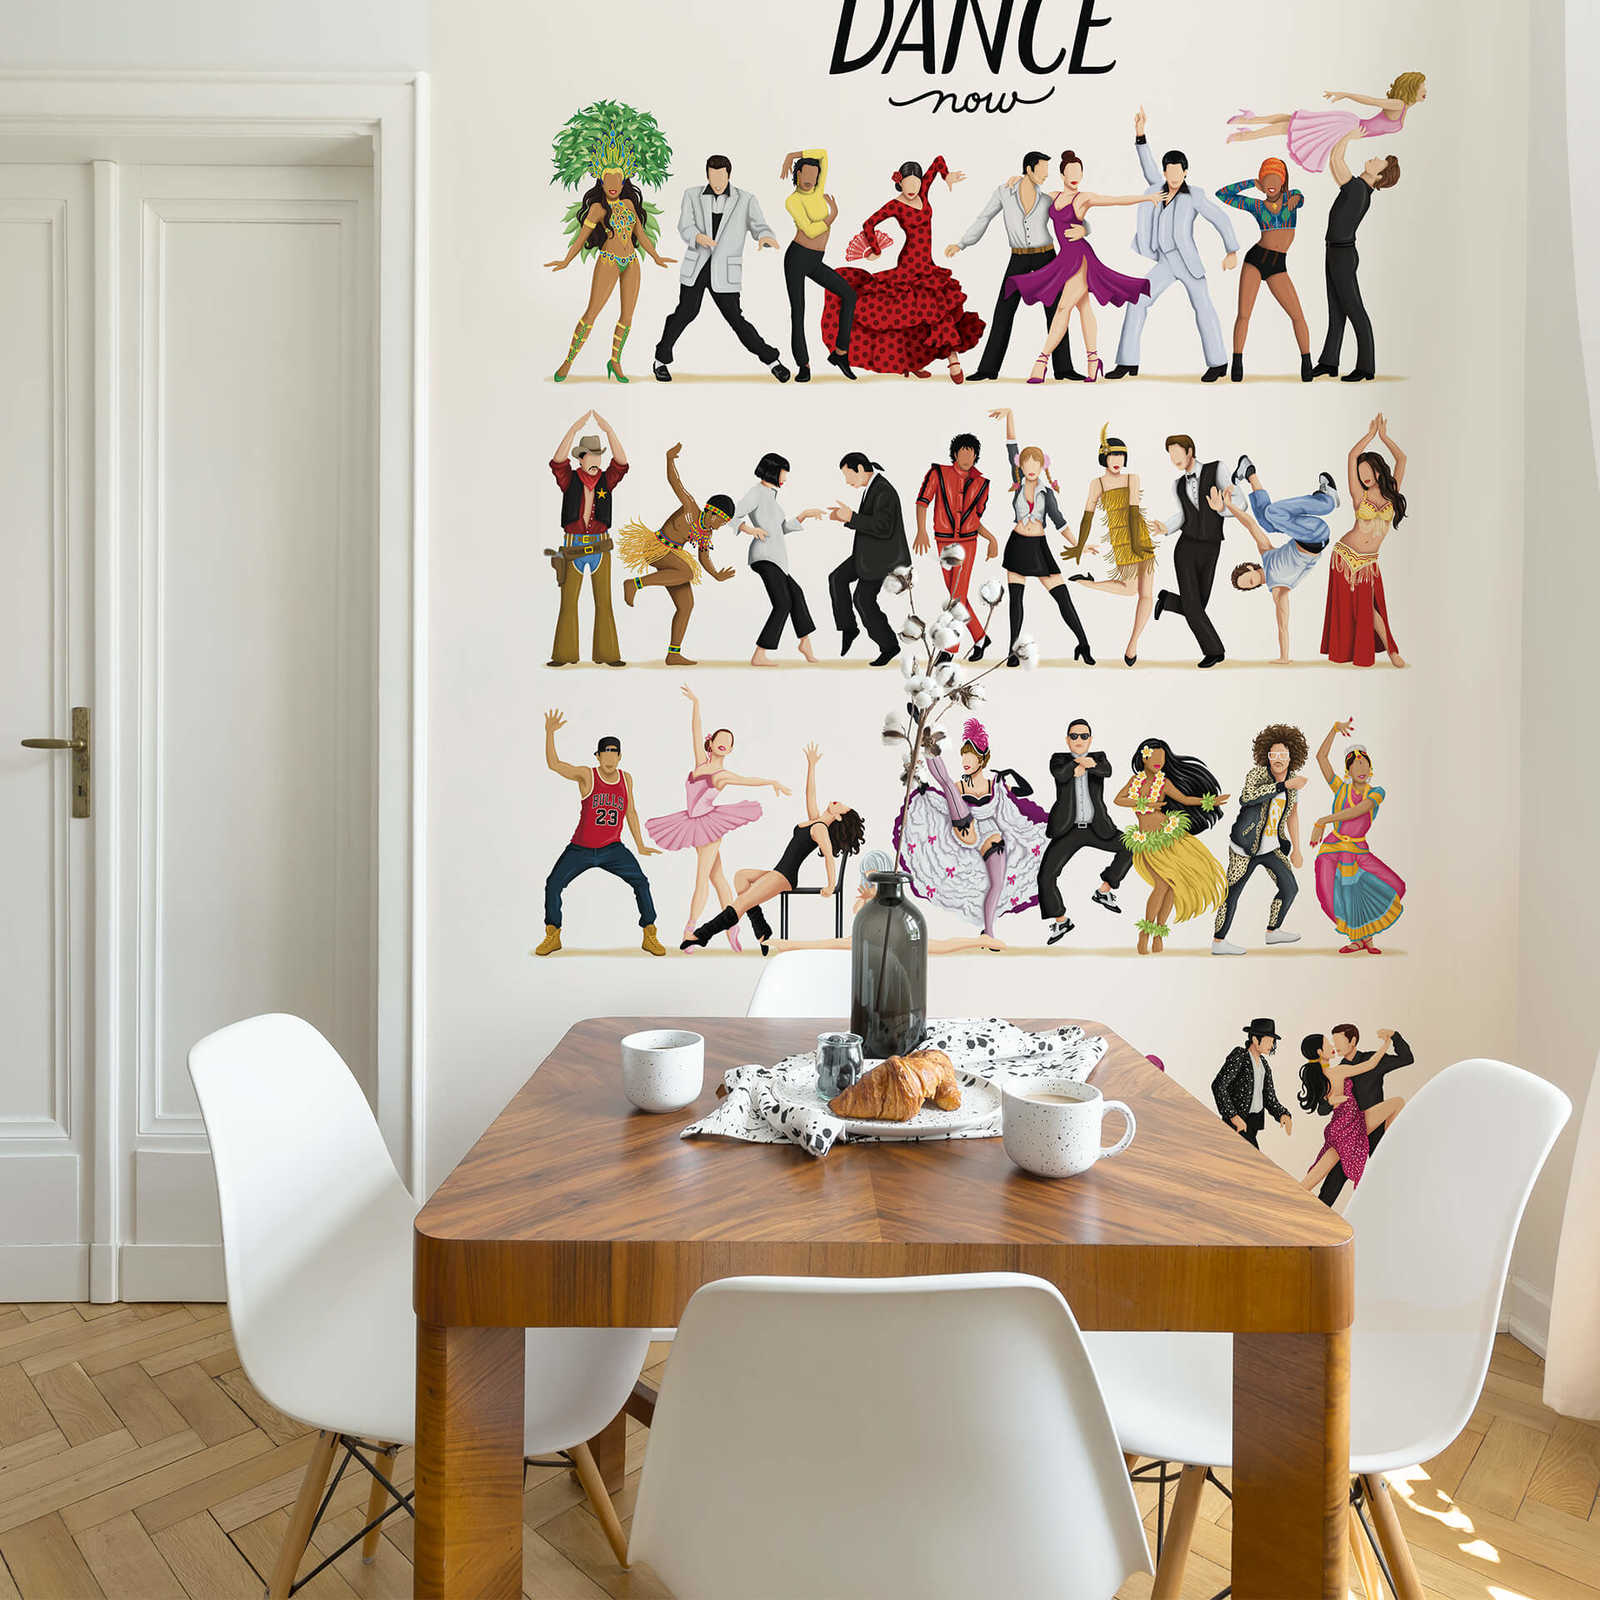             Photo wallpaper dancing people sketched
        